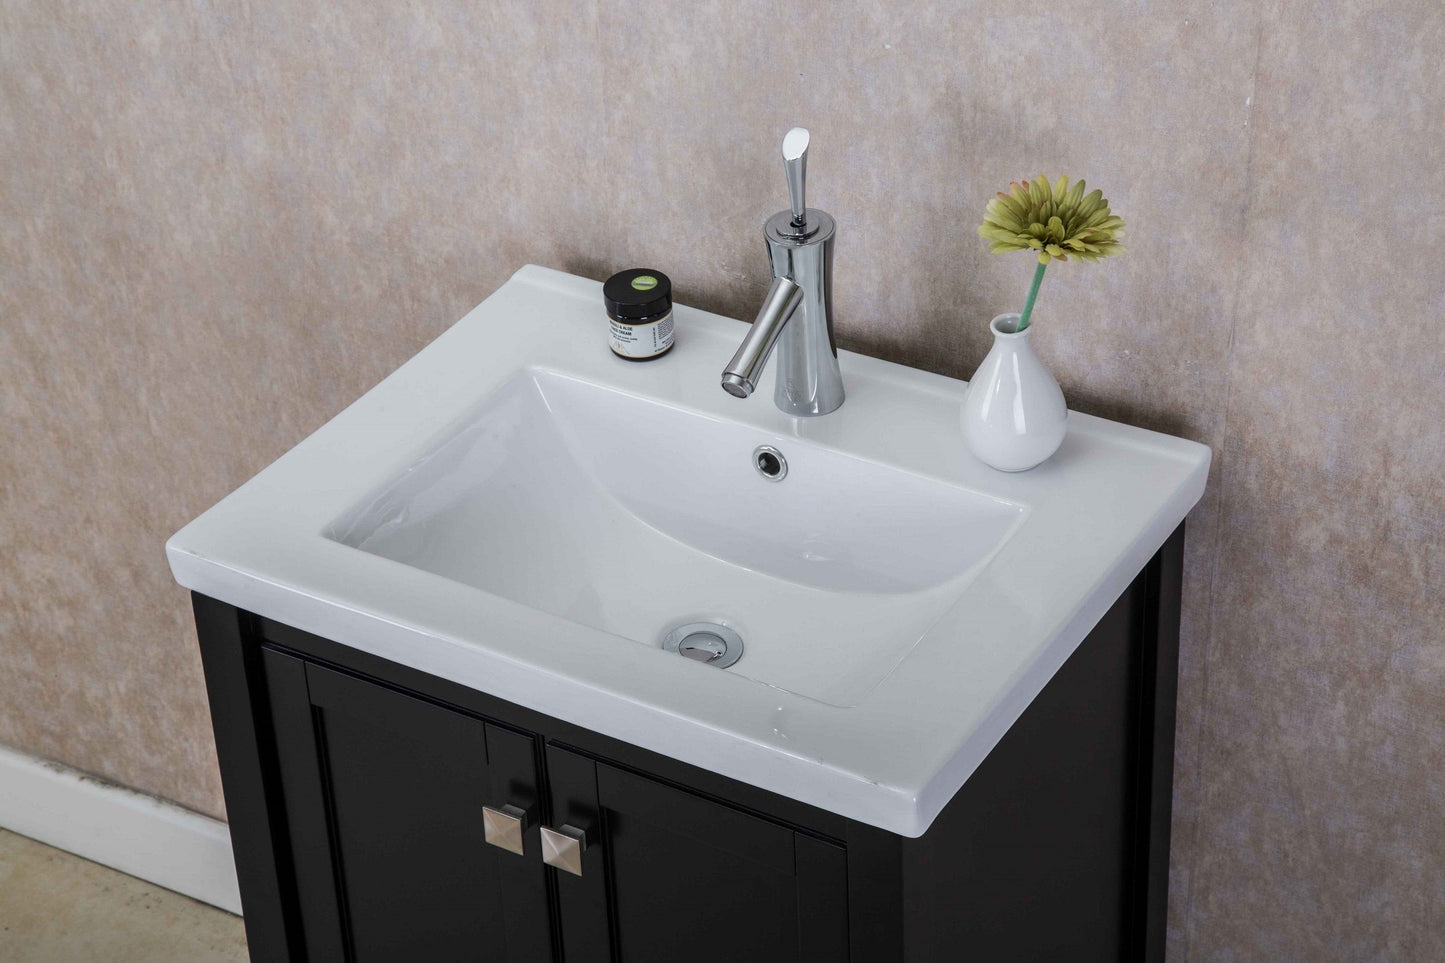 Eviva Tiblisi 24" Modern/Transitional Bathroom Vanity with White Porcelain Sink - Luxe Bathroom Vanities Luxury Bathroom Fixtures Bathroom Furniture